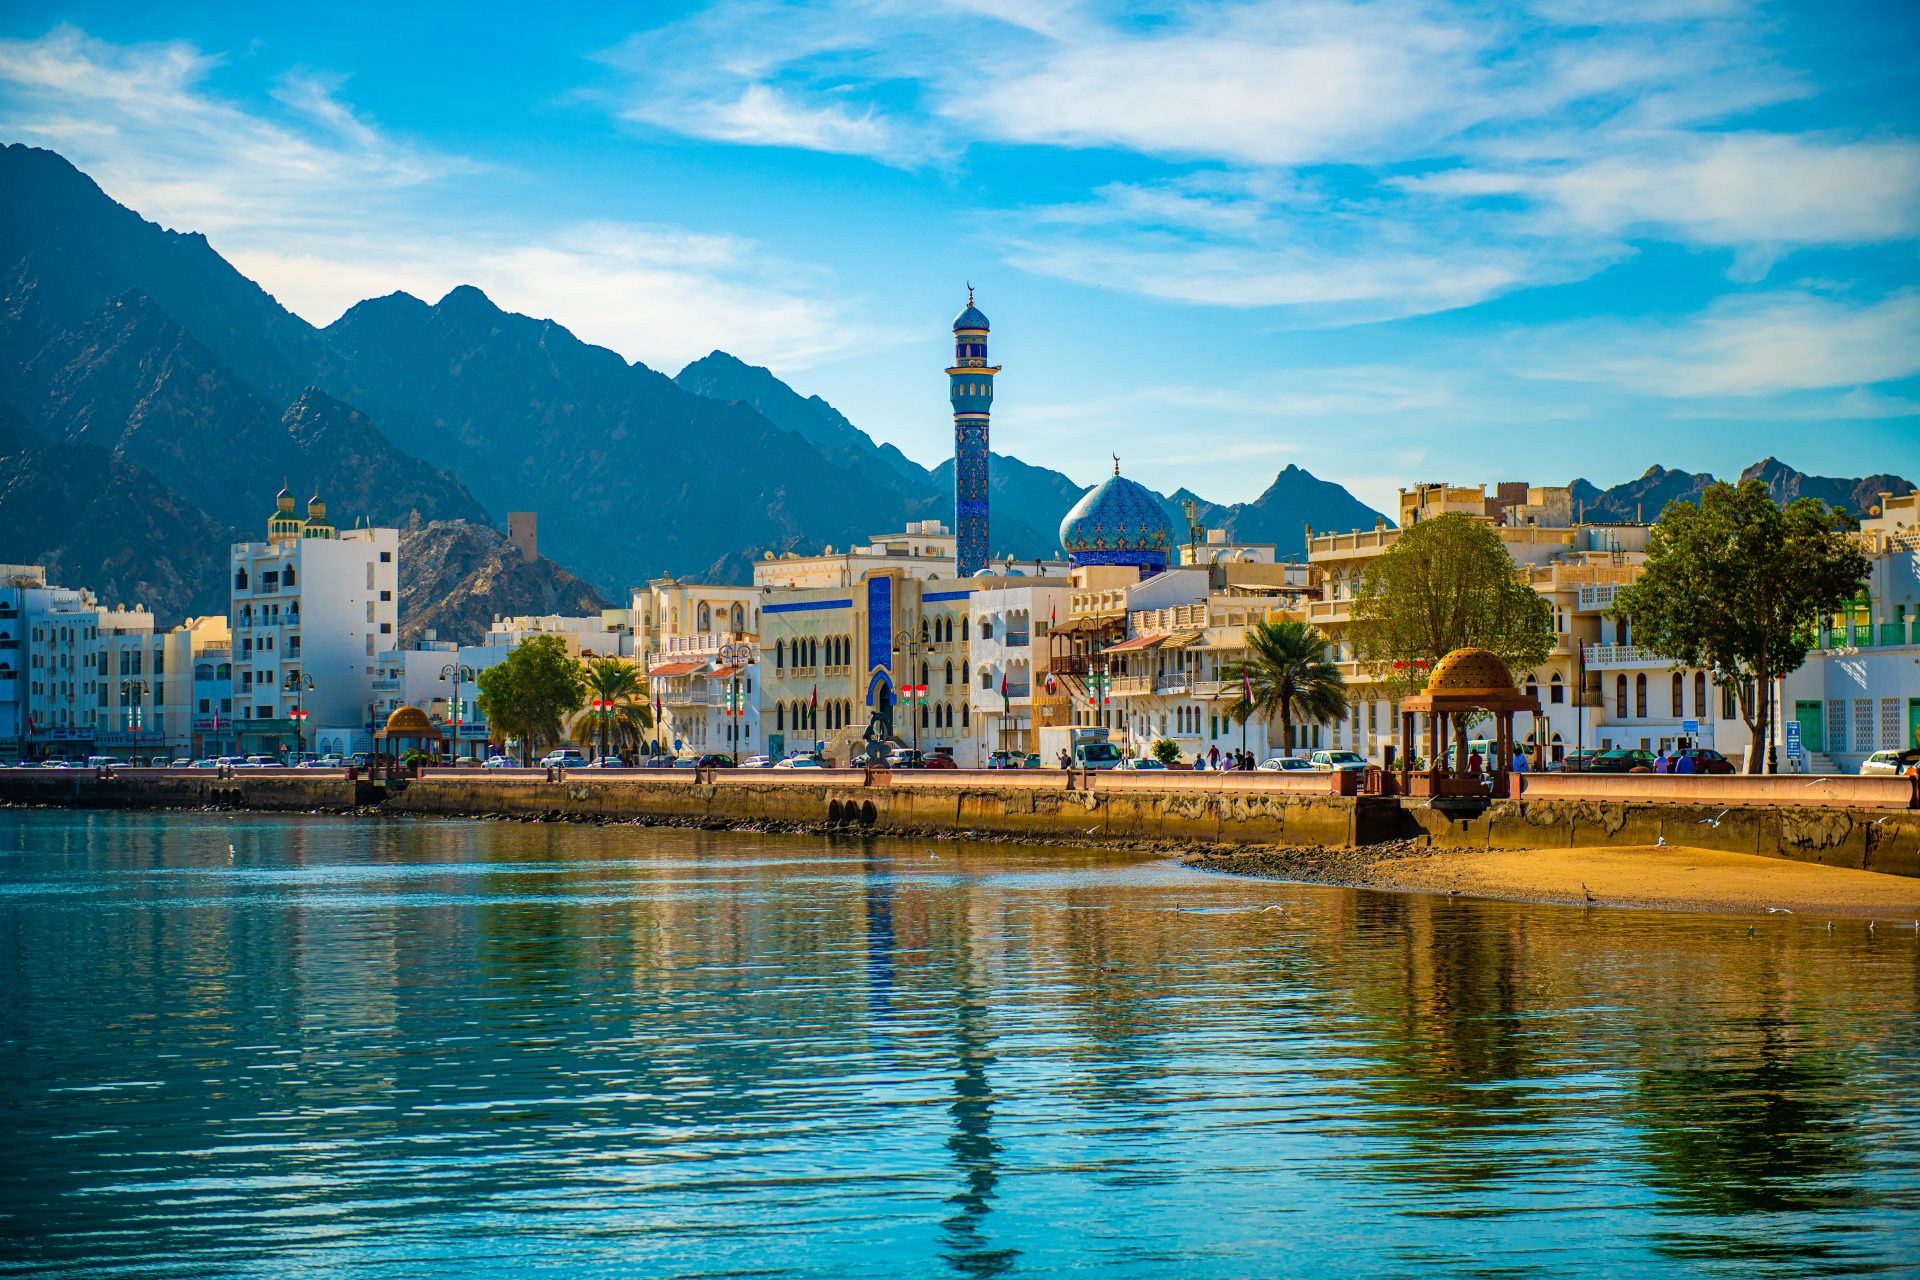 10th best: Muscat, Oman